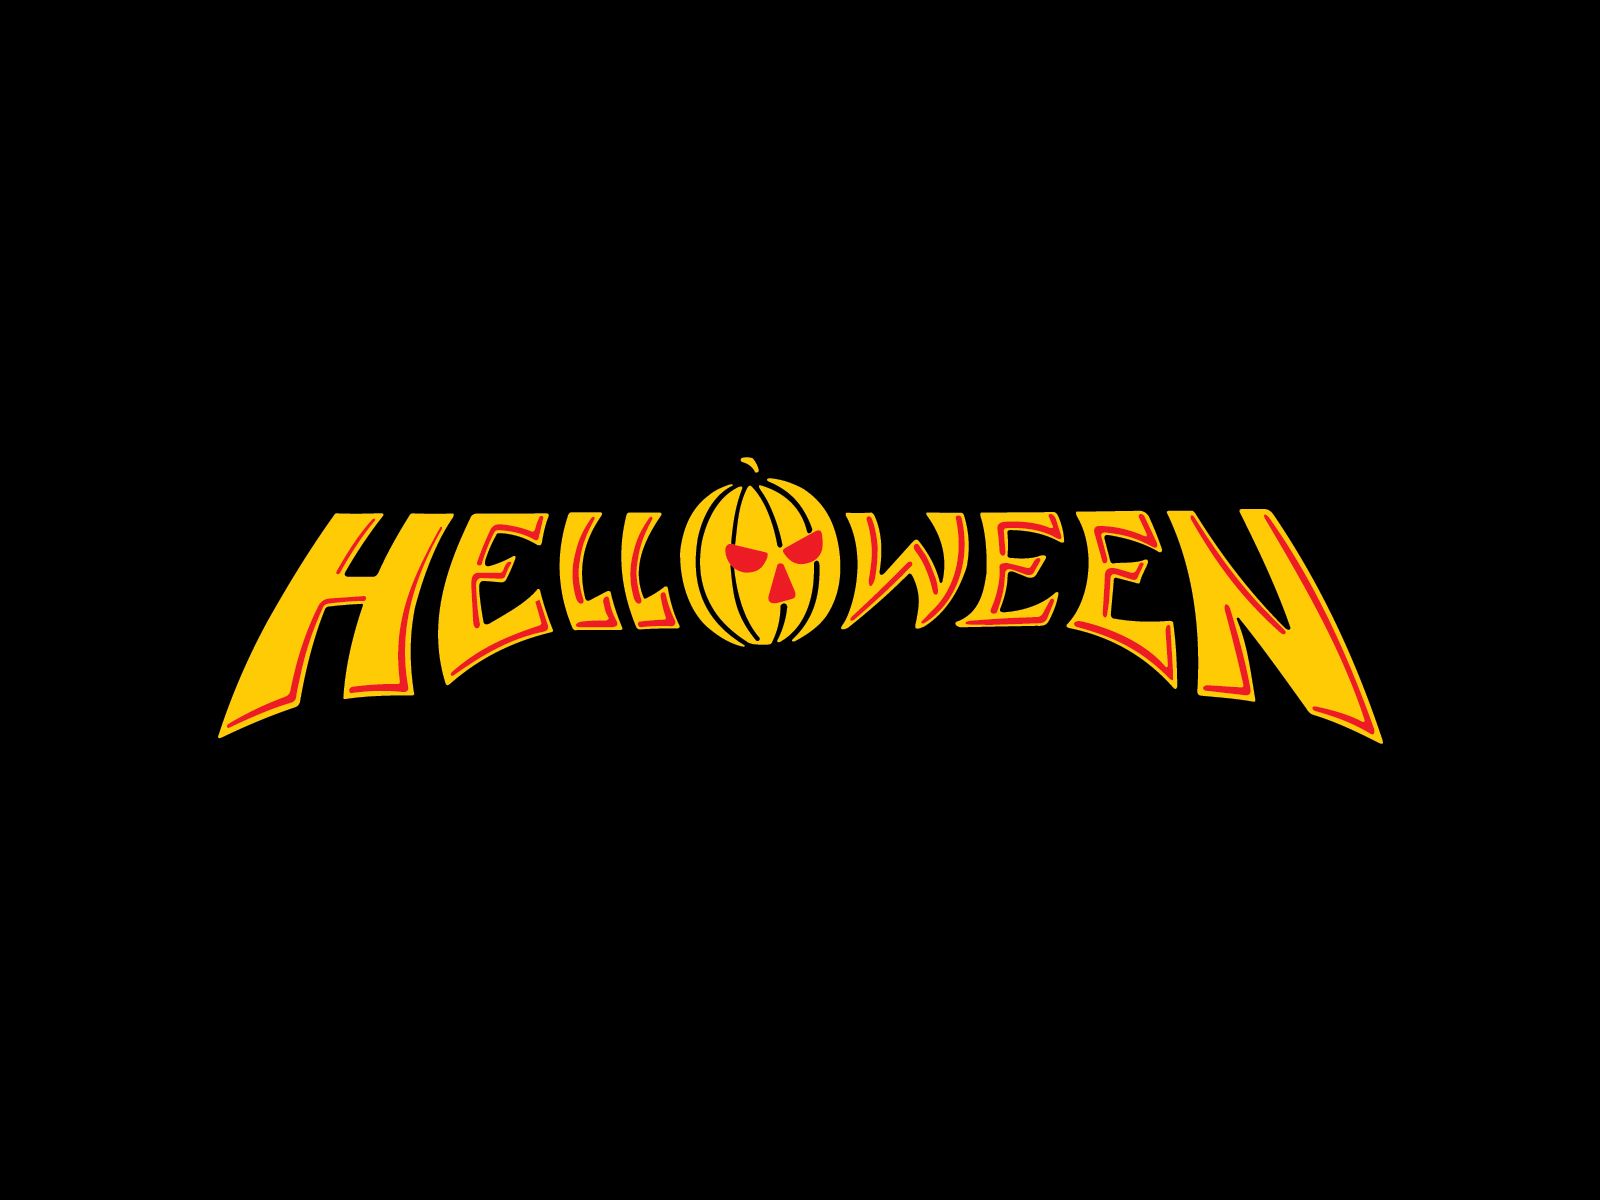 Helloween logo wallpaper. Metal band logos, Band wallpaper, Heavy metal